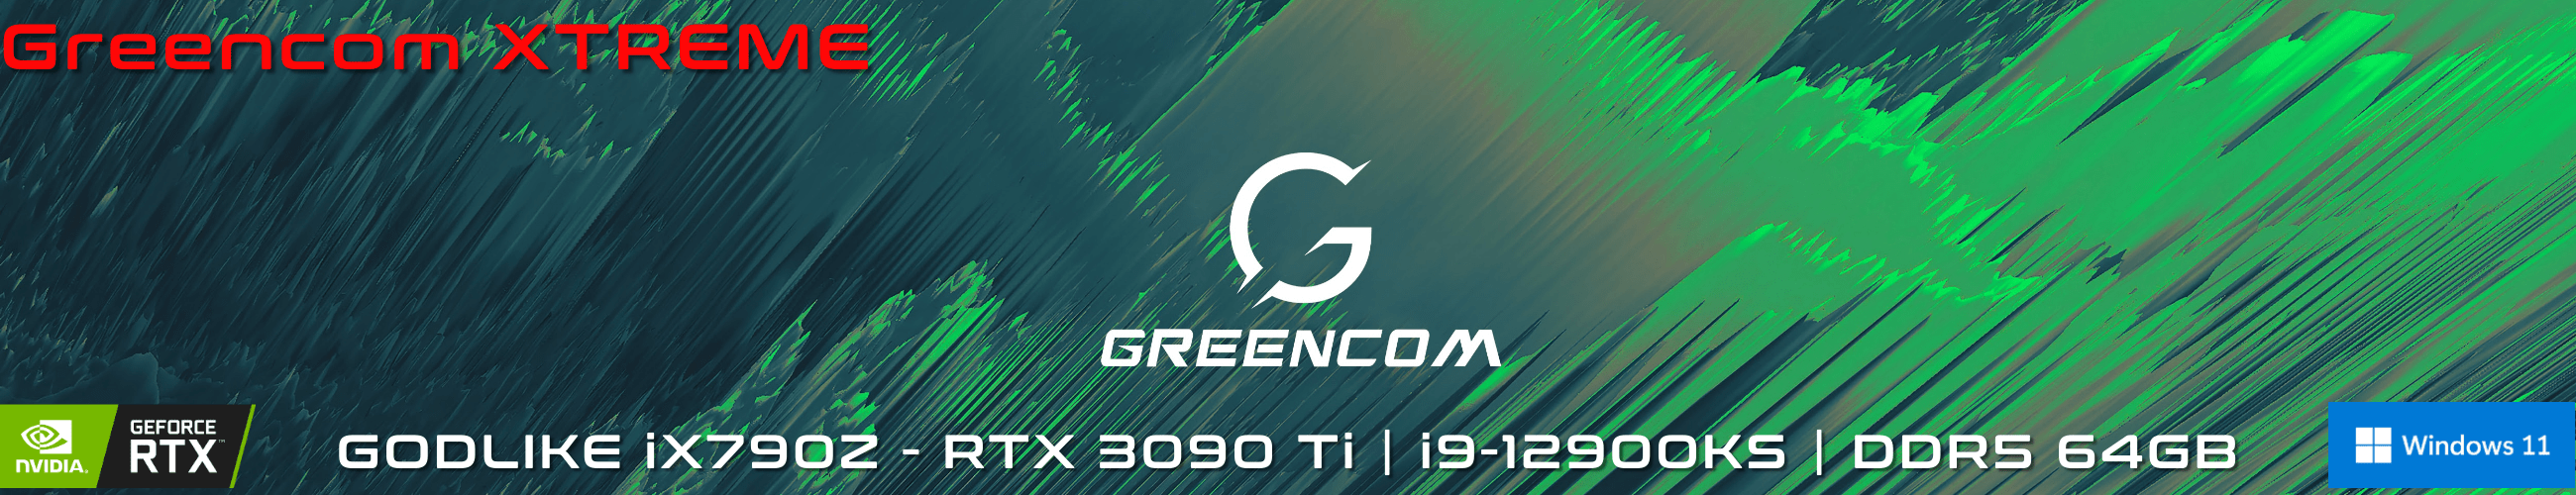 Greencom GODLIKE iX790Z